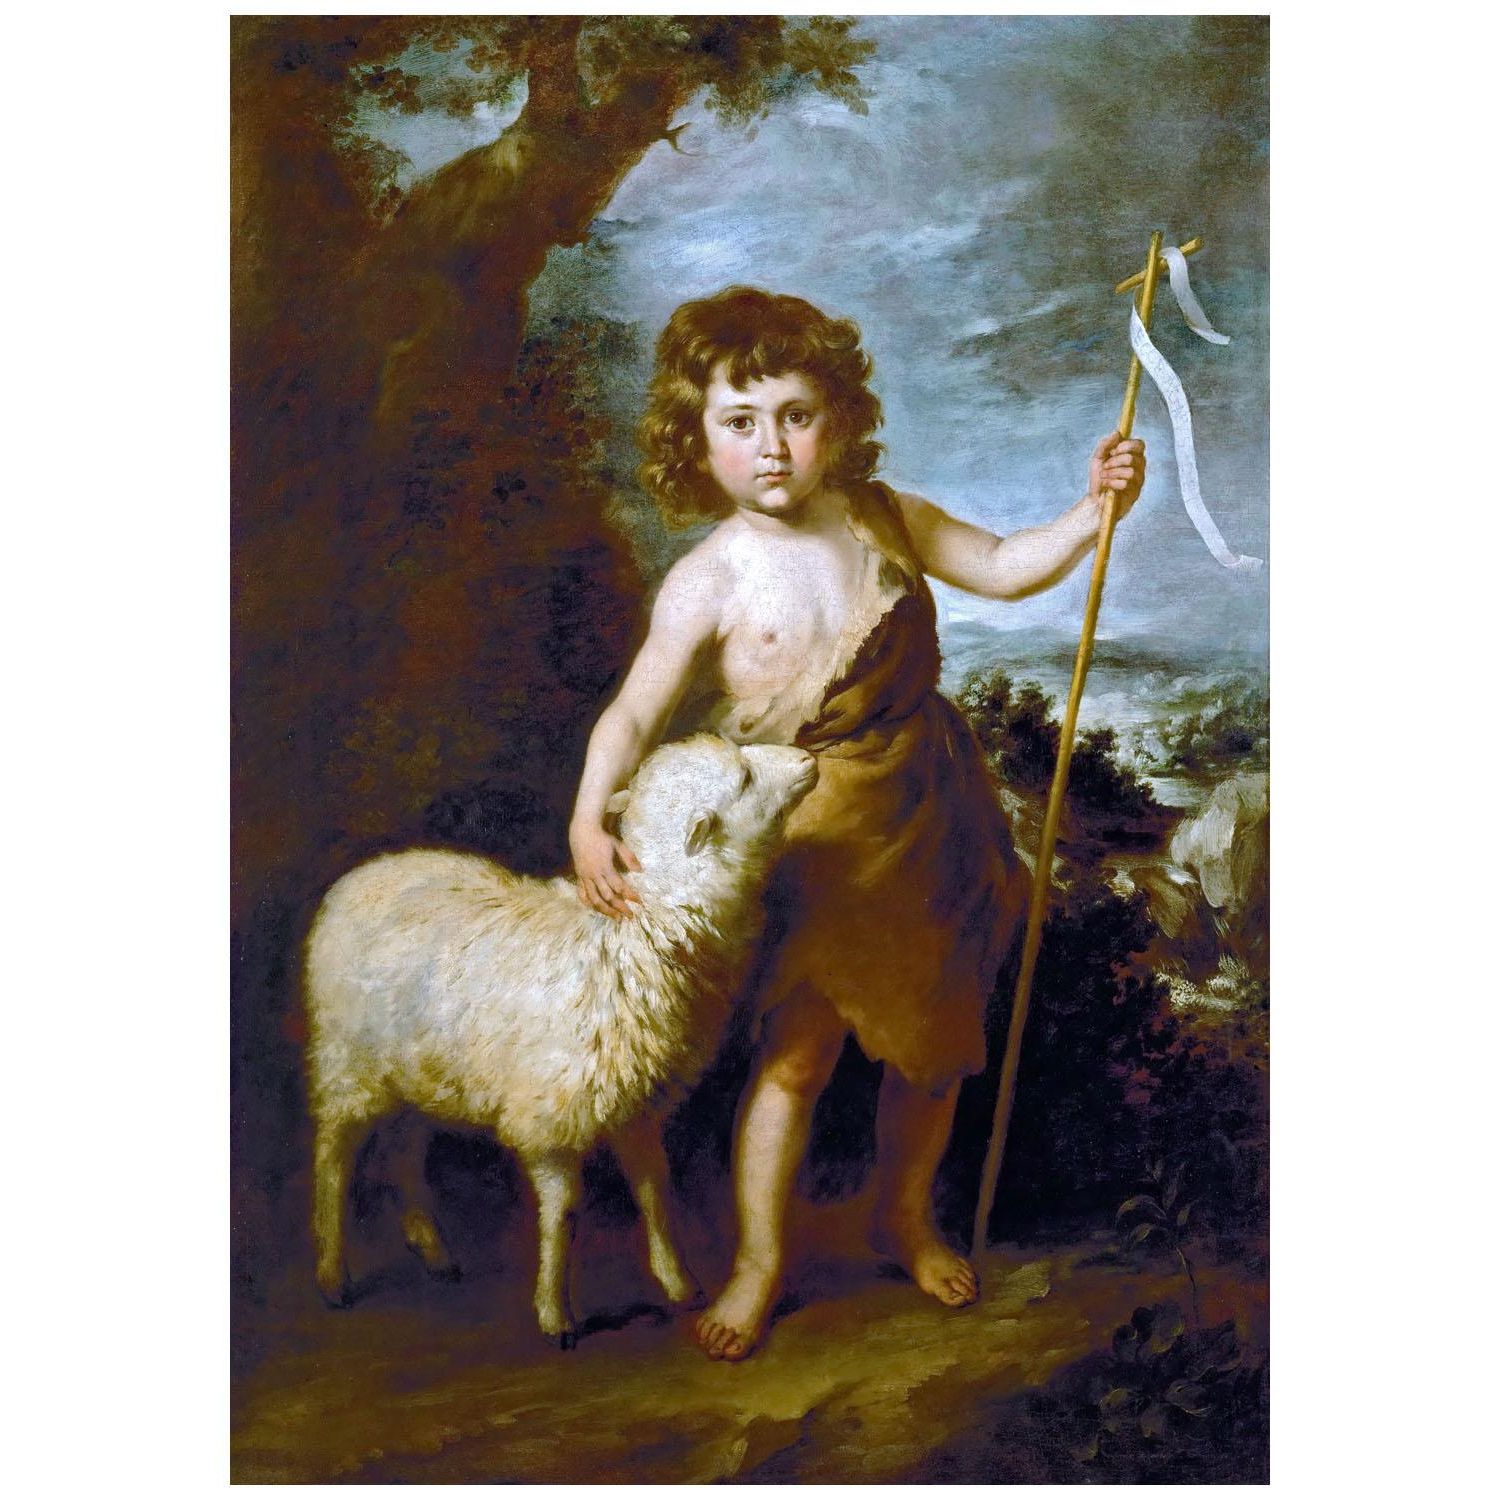 Bartolome Esteban Murillo. Juan el Bautista como un niño. 1650. KHM Wien